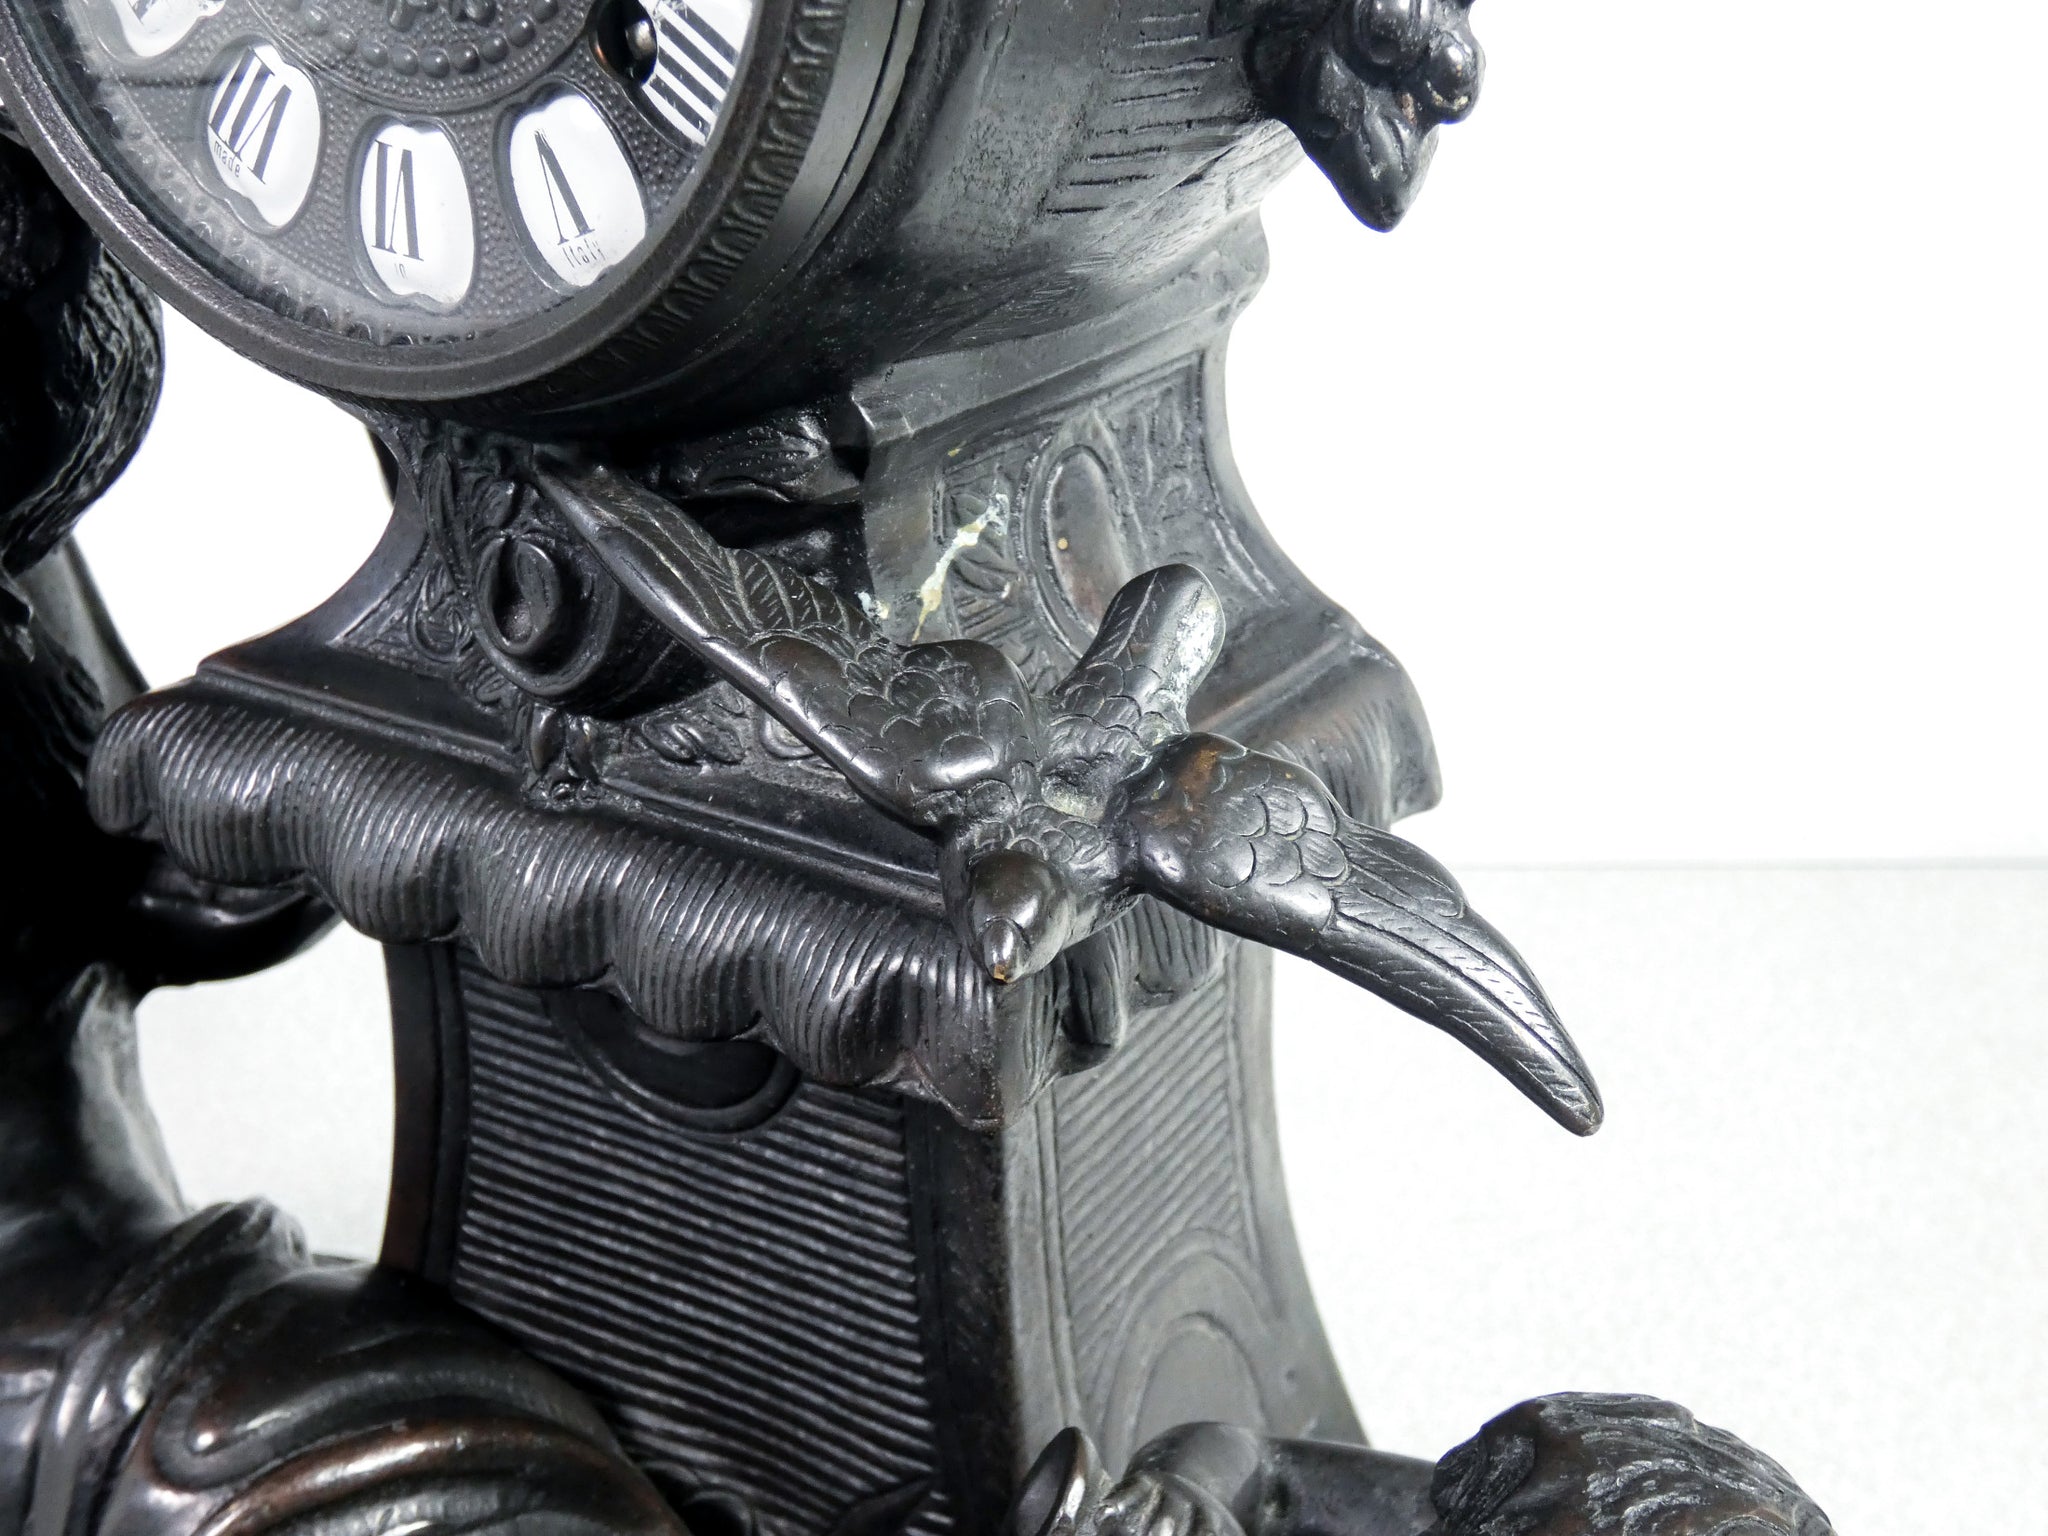 orologio parigina da tavolo stile luigi xv bronzo manuale suoneria mantel clock